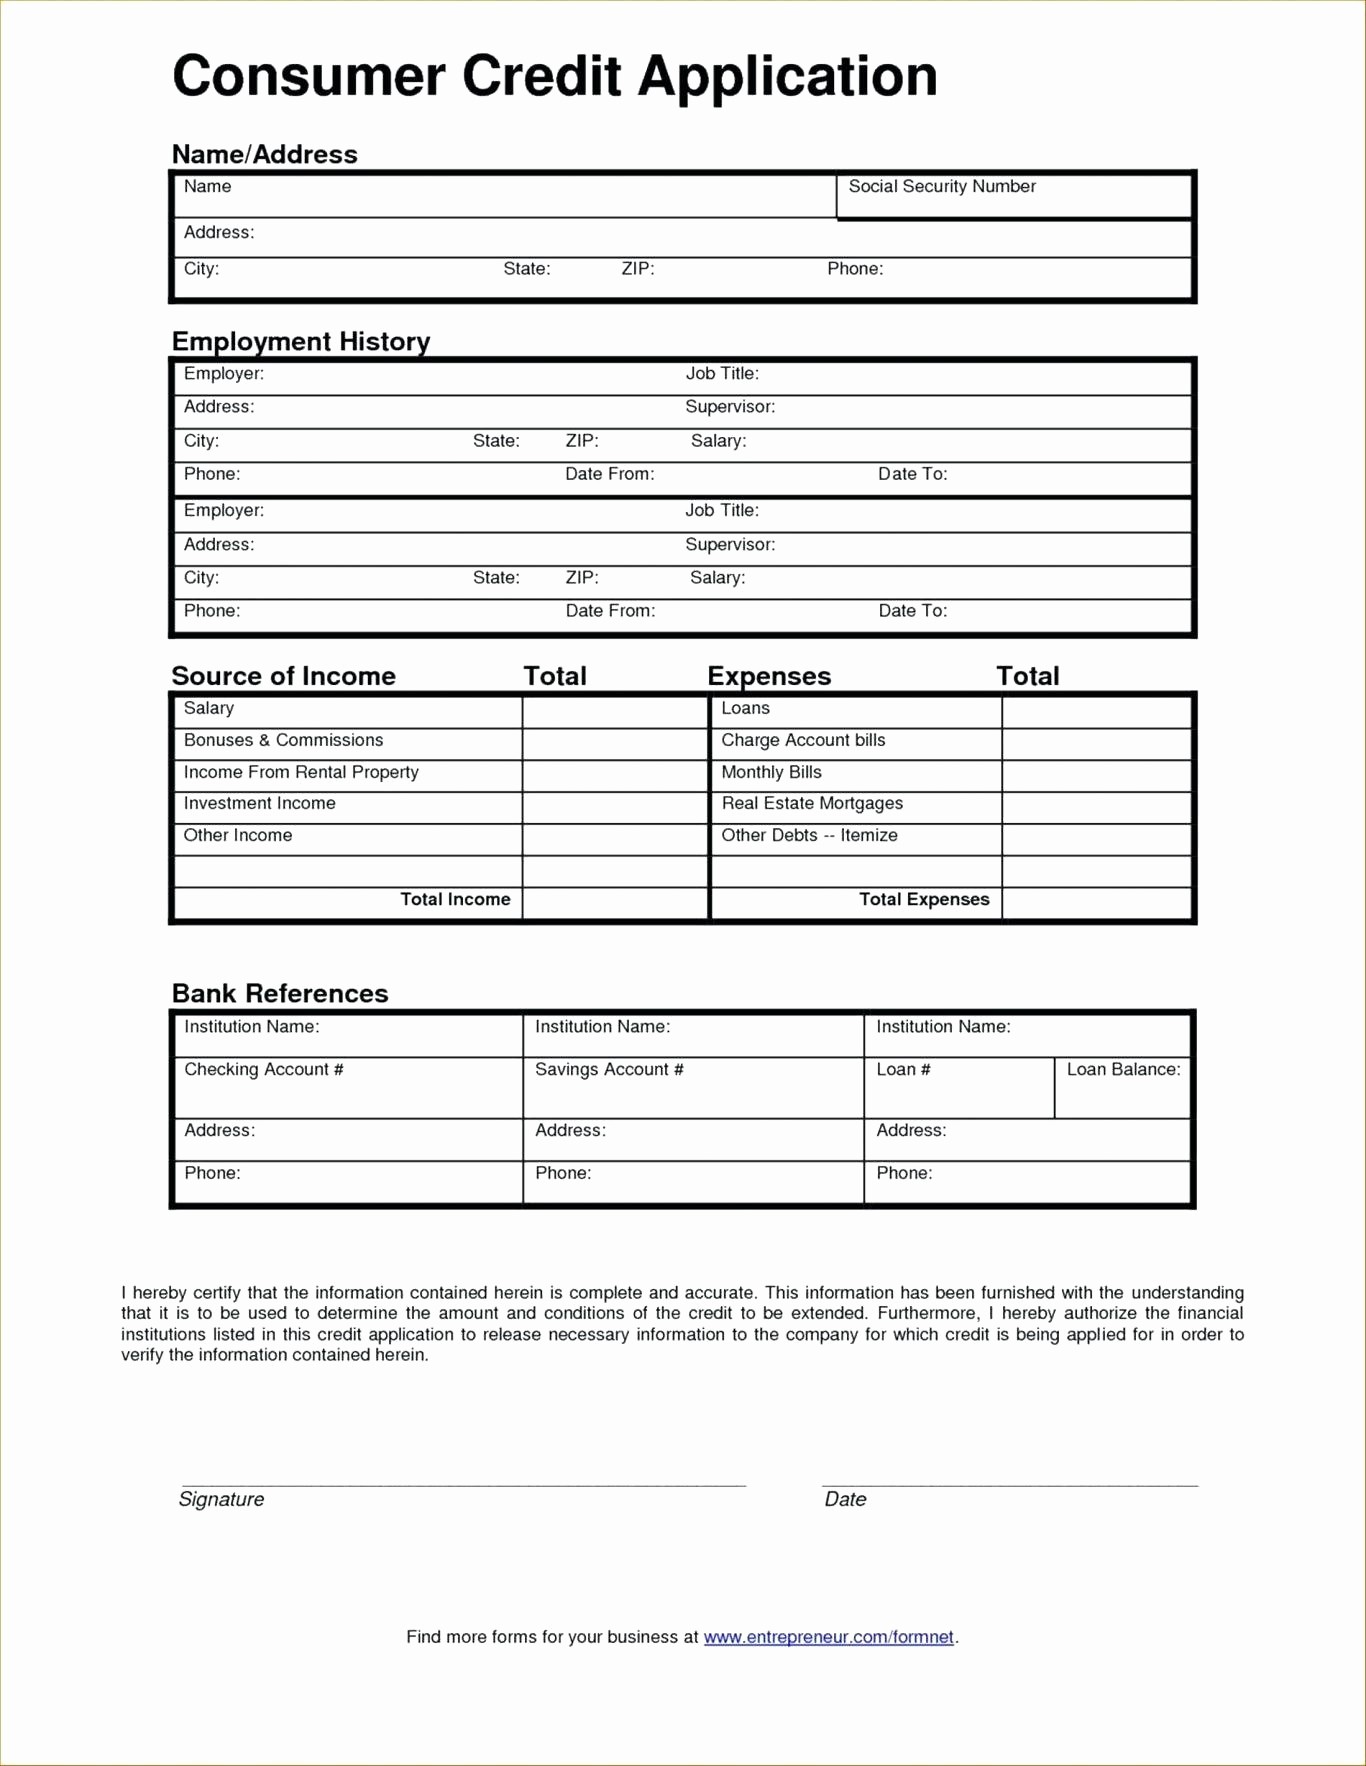 Personal Credit Application form Free Unique Template Consumer Credit Application Template